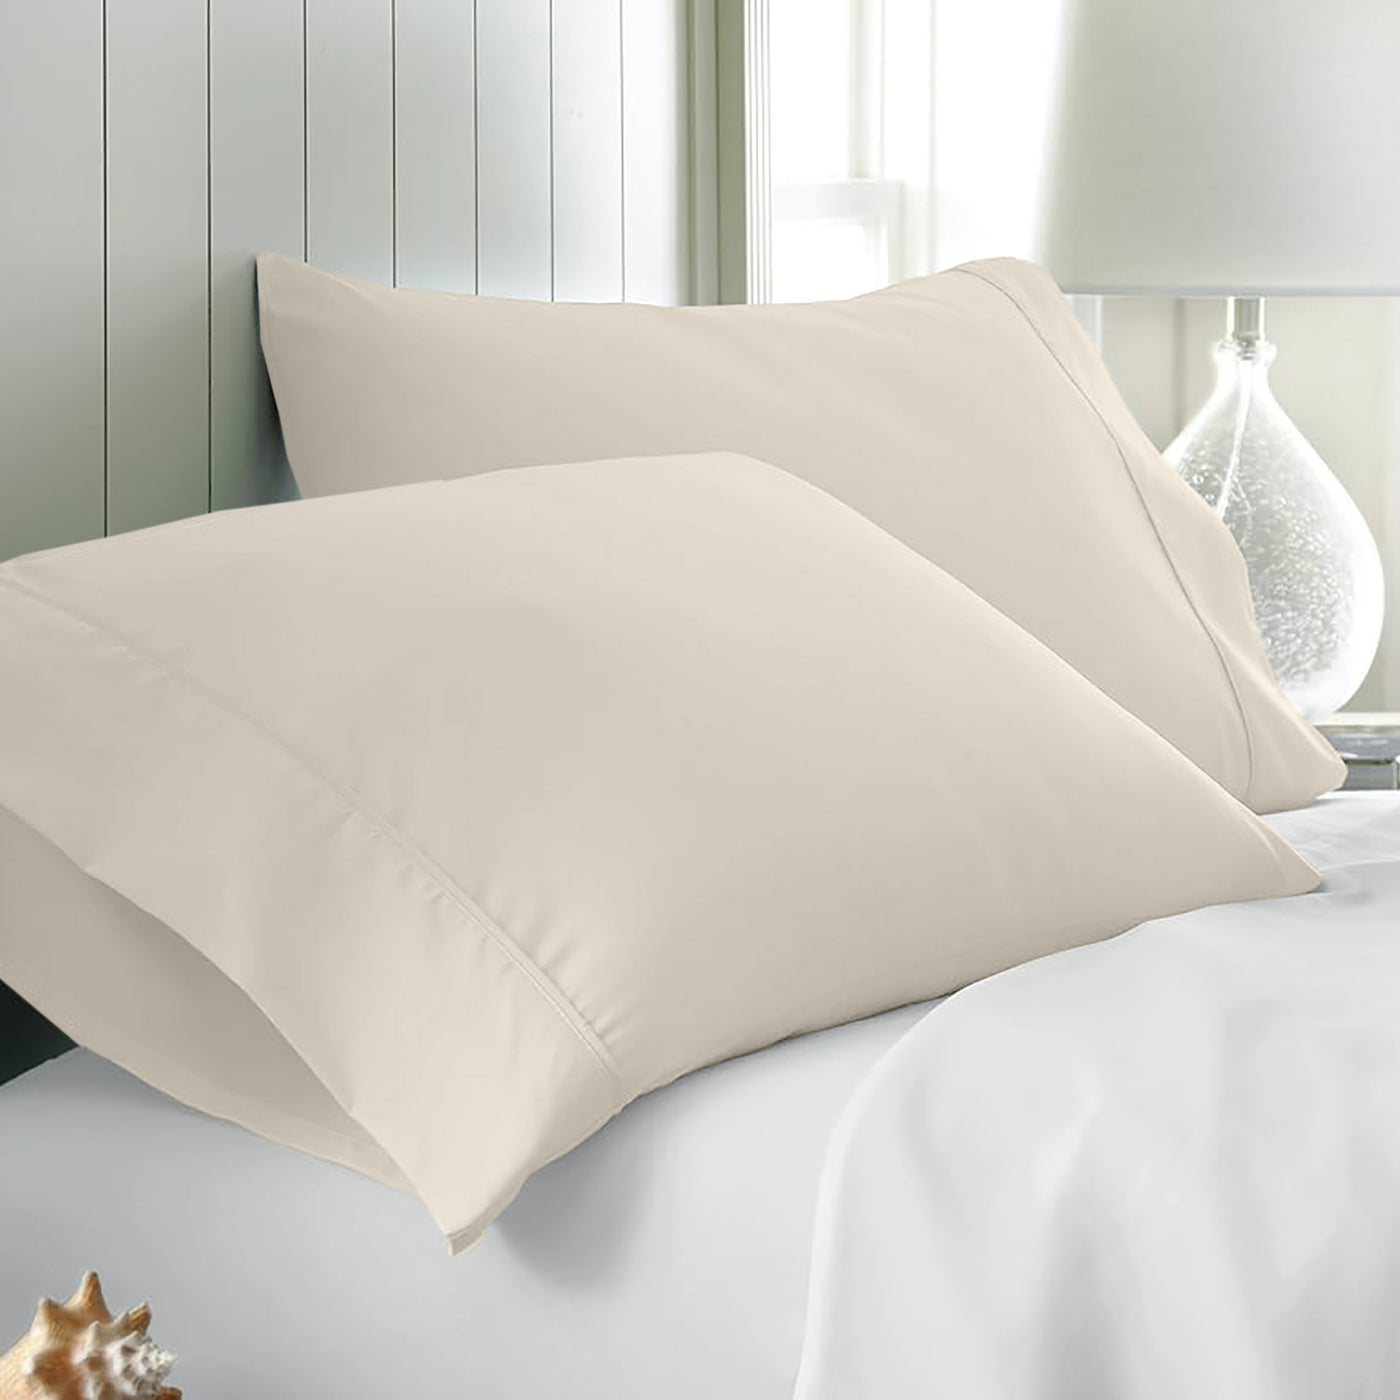 Set Of 2 - 300 TC Egyptian Cotton Pillow Covers - Ivory